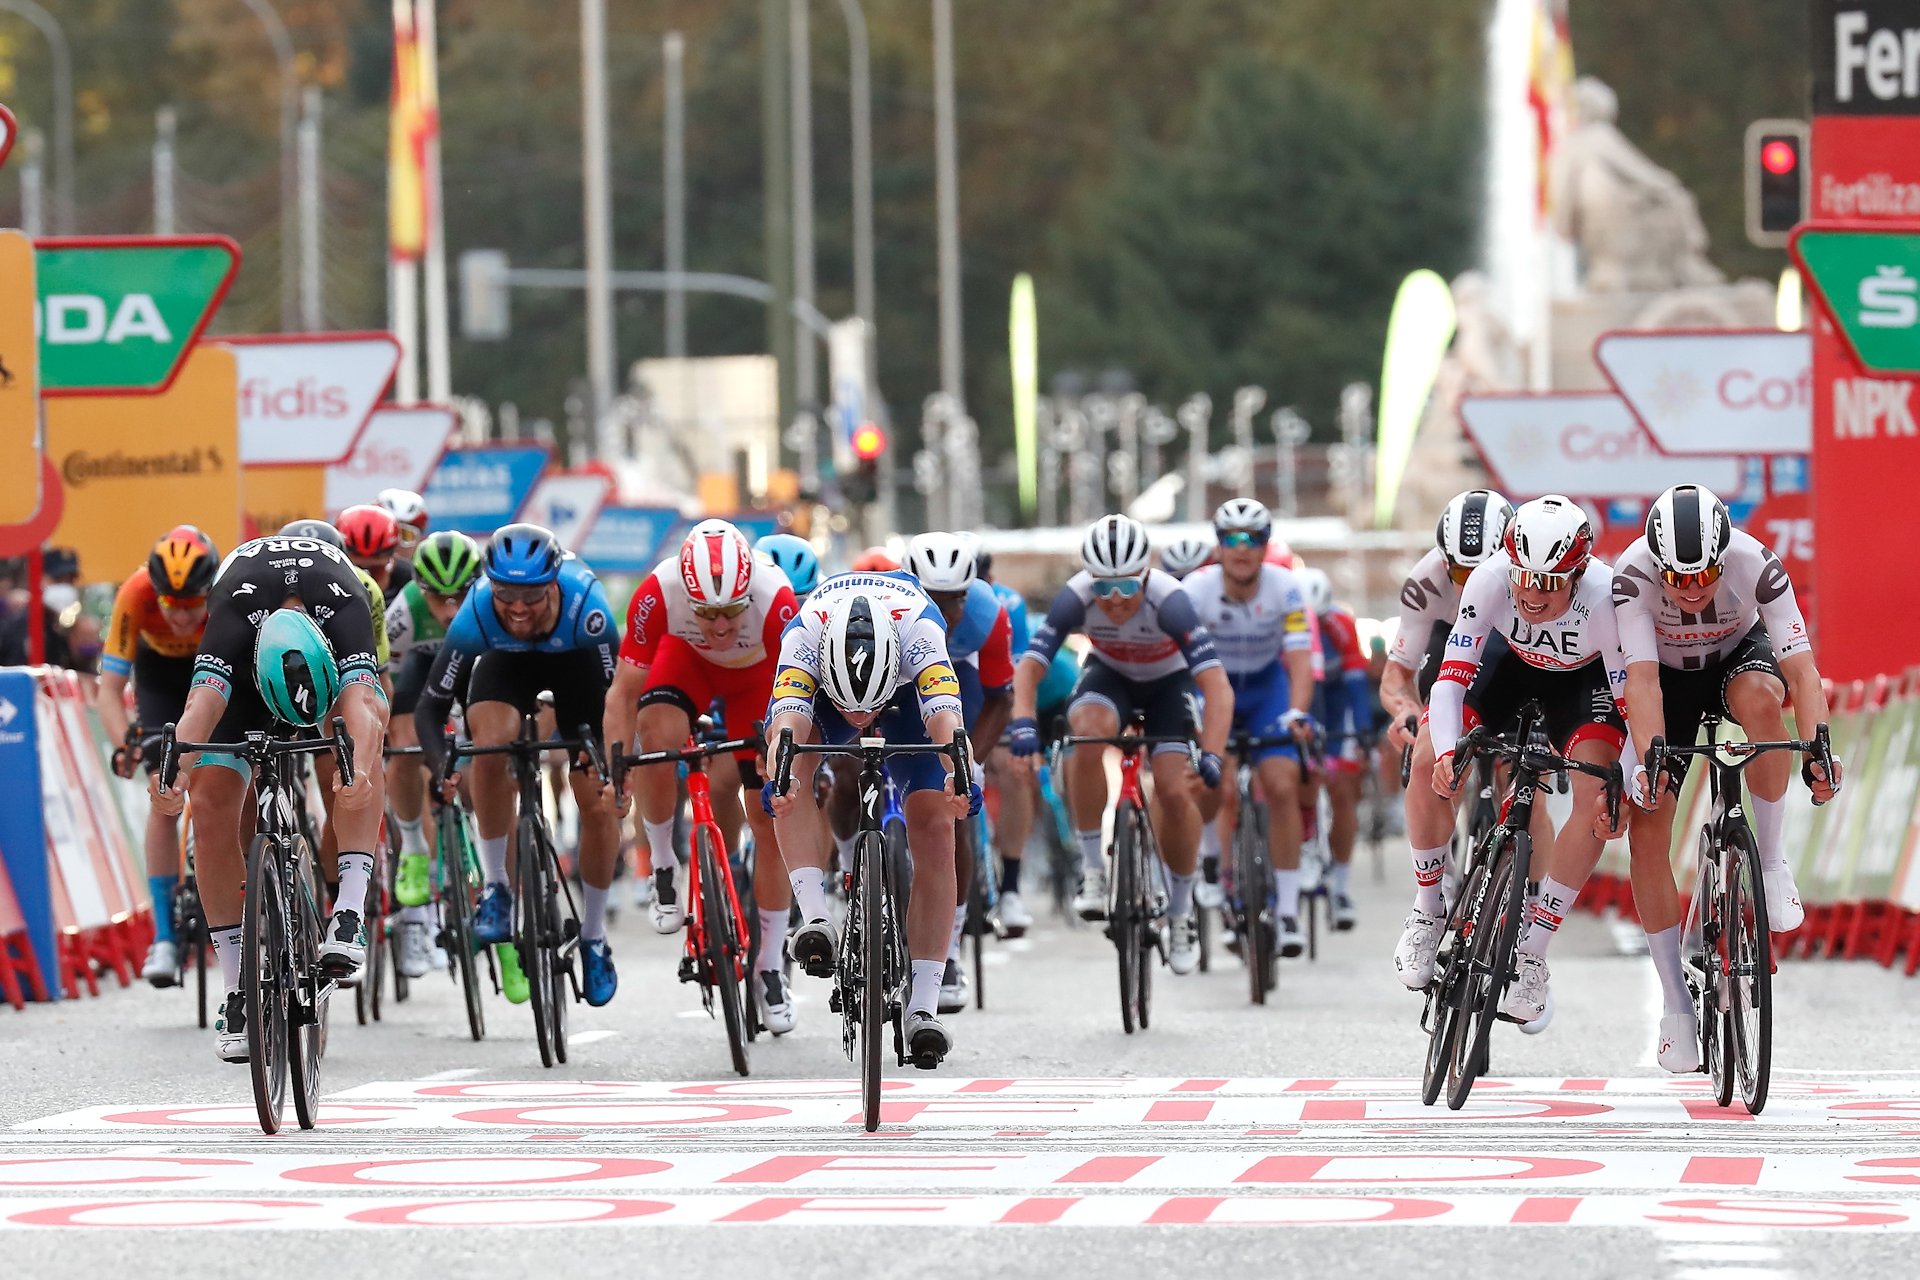 Vuelta a Espana 2020: etap 18. Ackermann na ulicach Madrytu, Roglic z drugim Grand Tourem